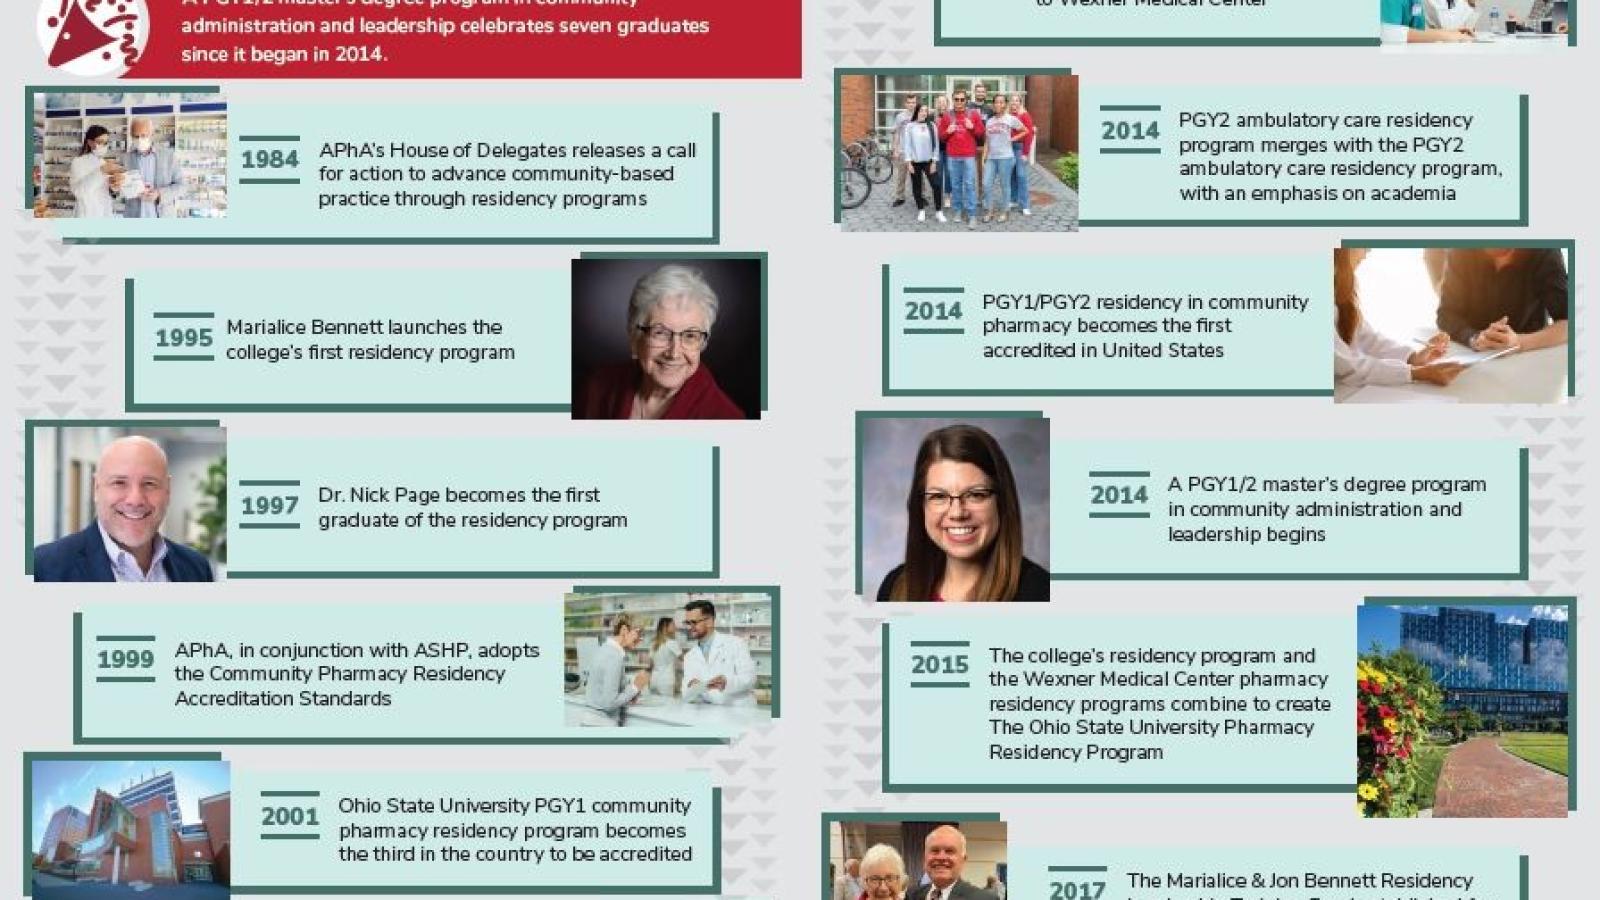 Timeline of Residency Programs